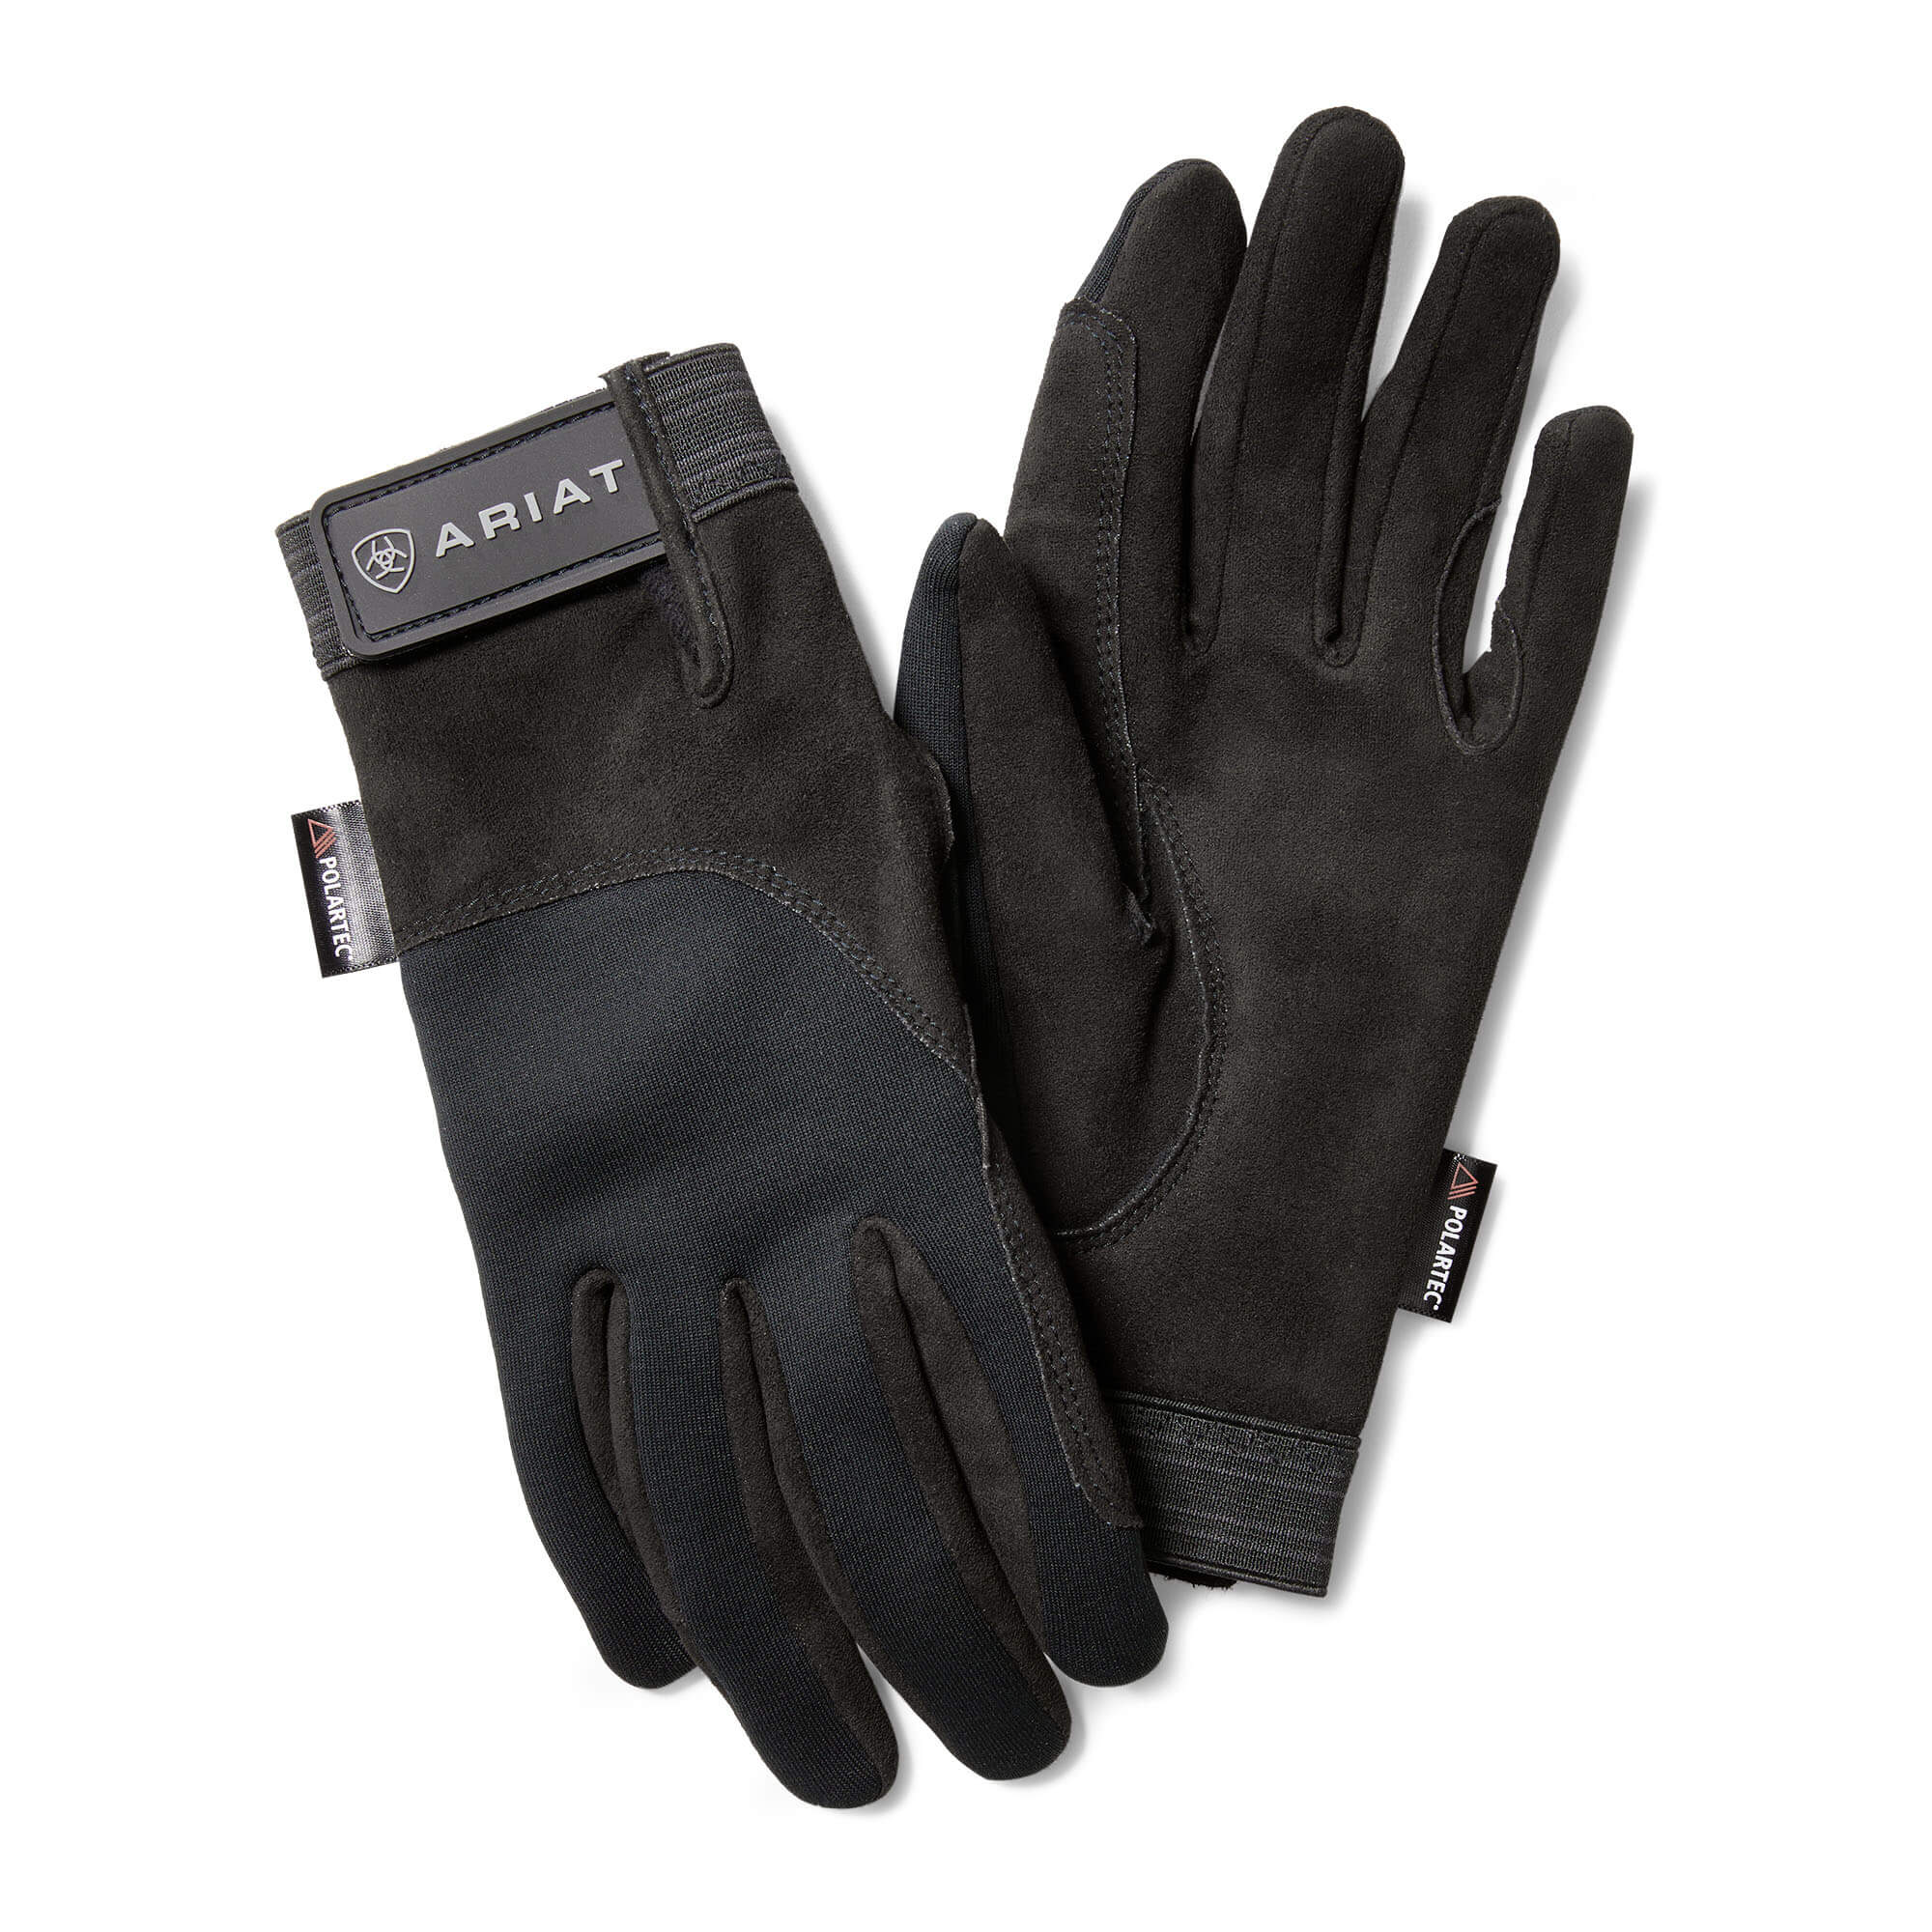 60% OFF ARIAT Riding Gloves - Insulated Tek Grip - Black - Size: 6.5